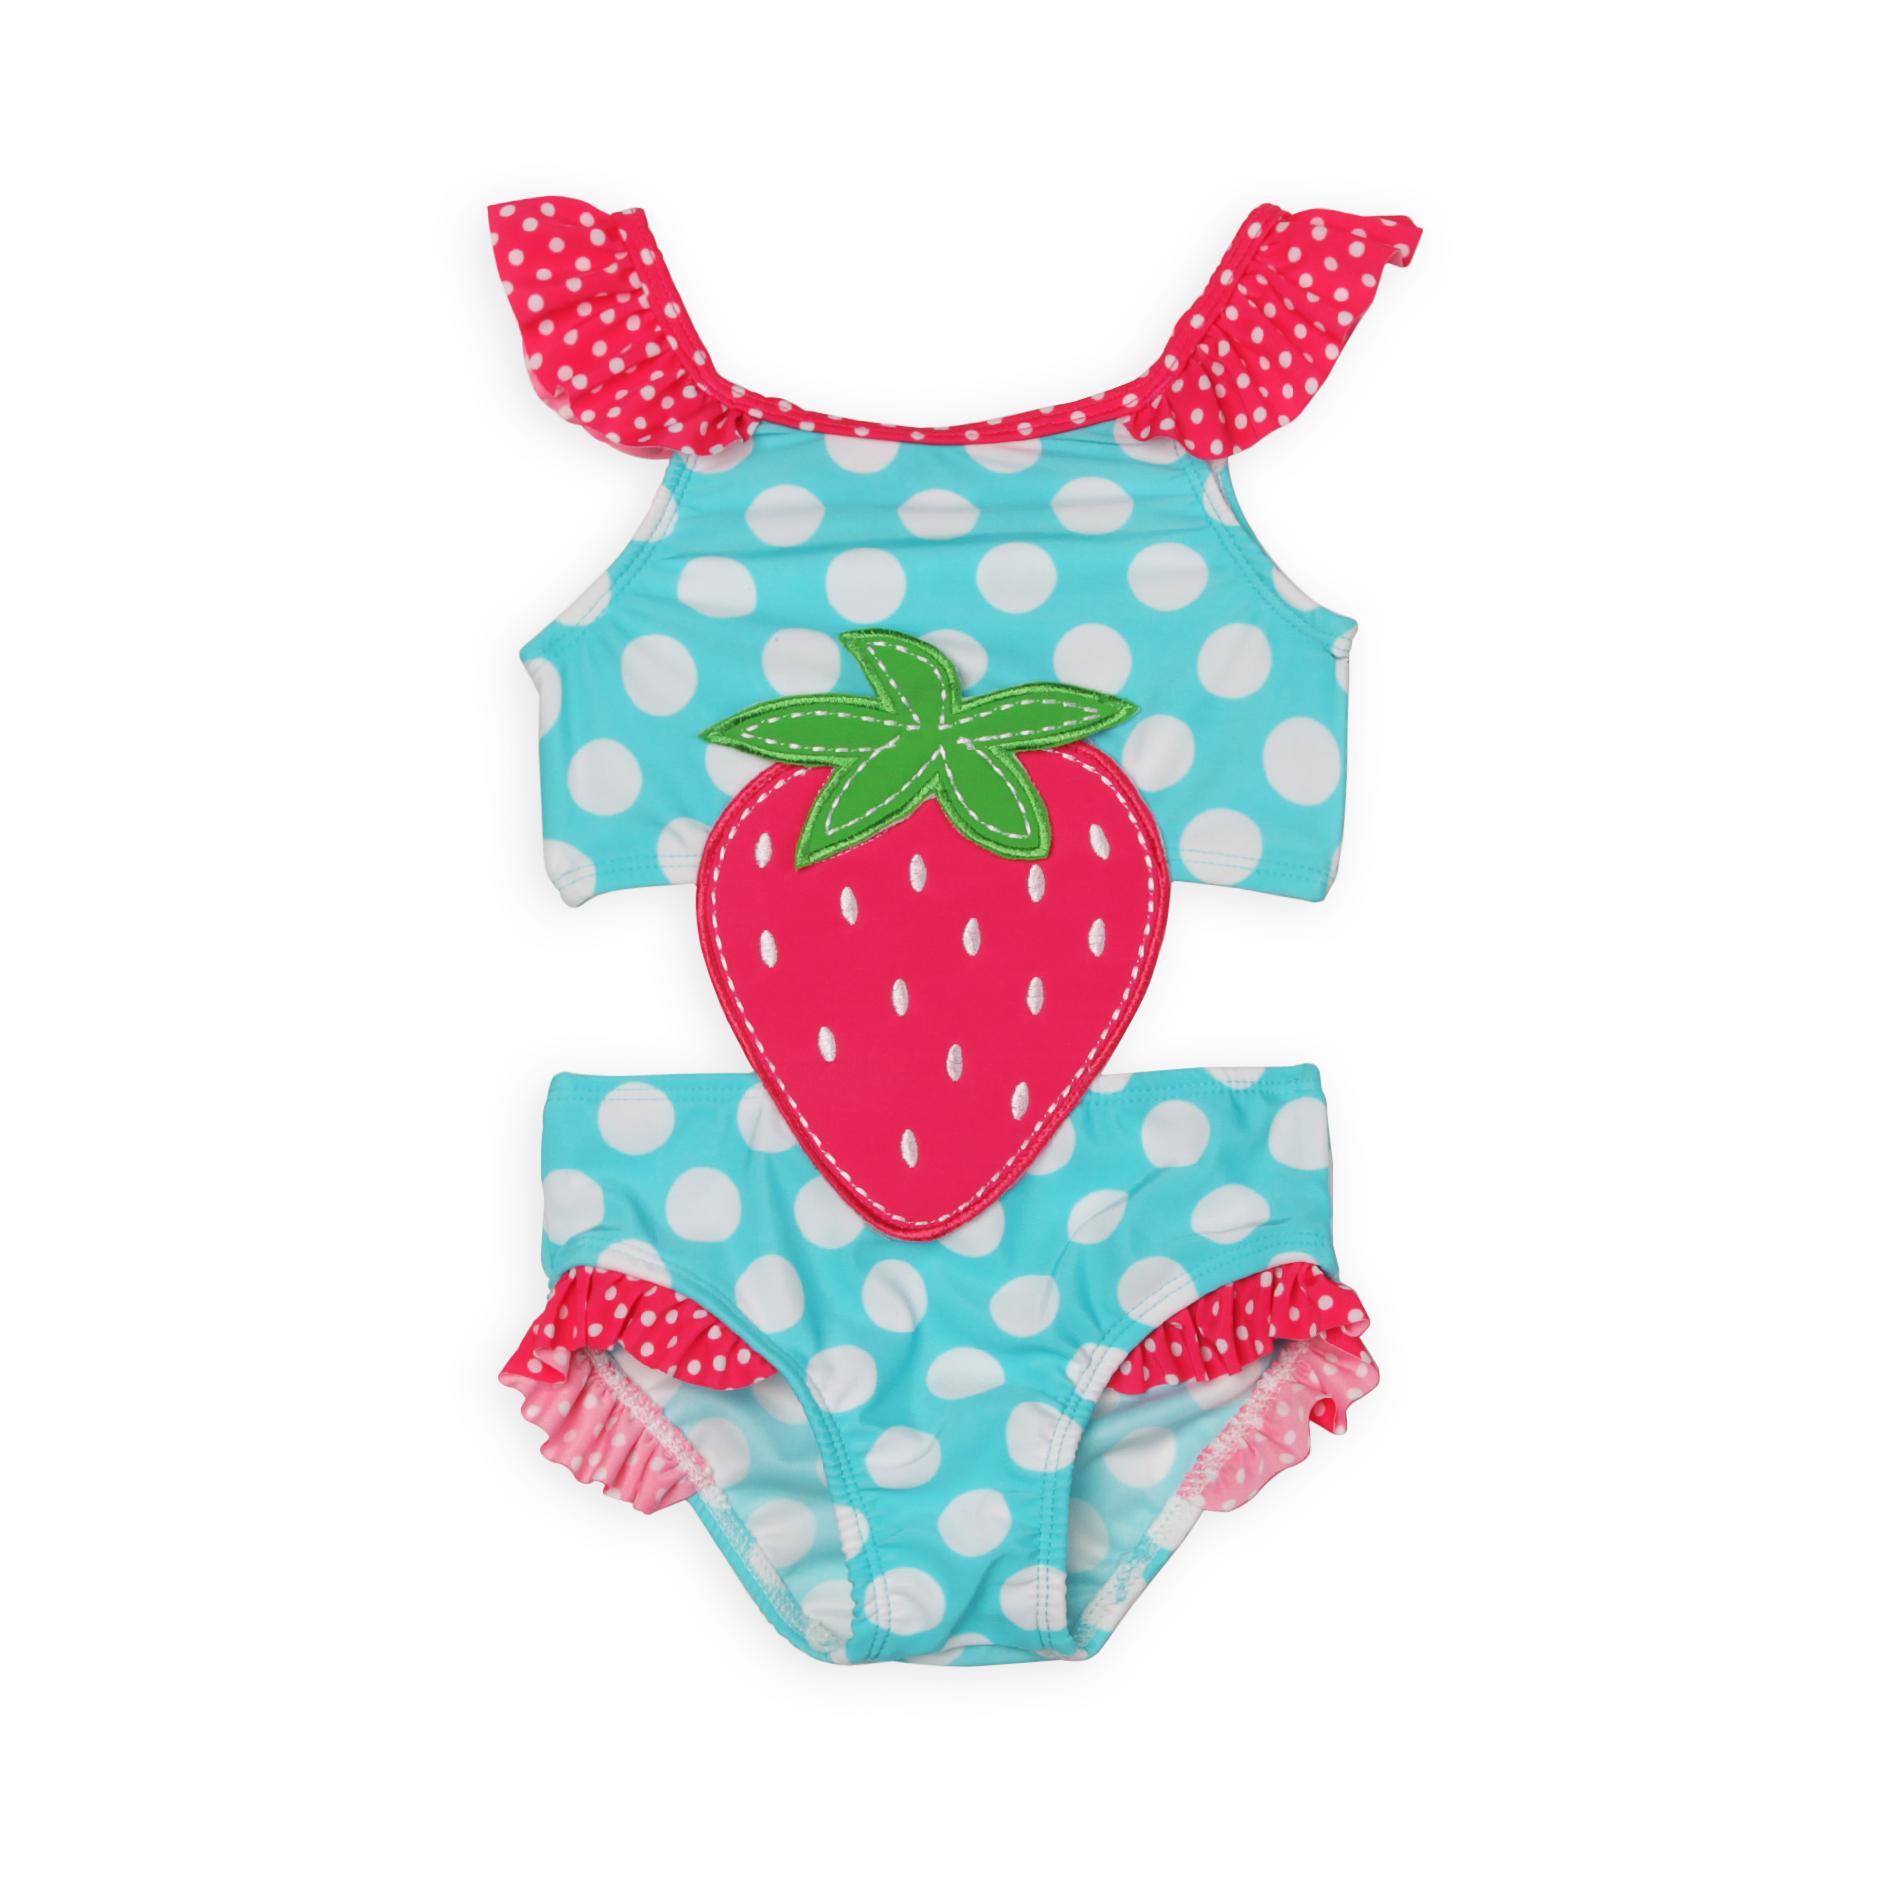 Joe Boxer Infant & Toddler Girl's Monokini Swimsuit - Strawberry & Polka Dots